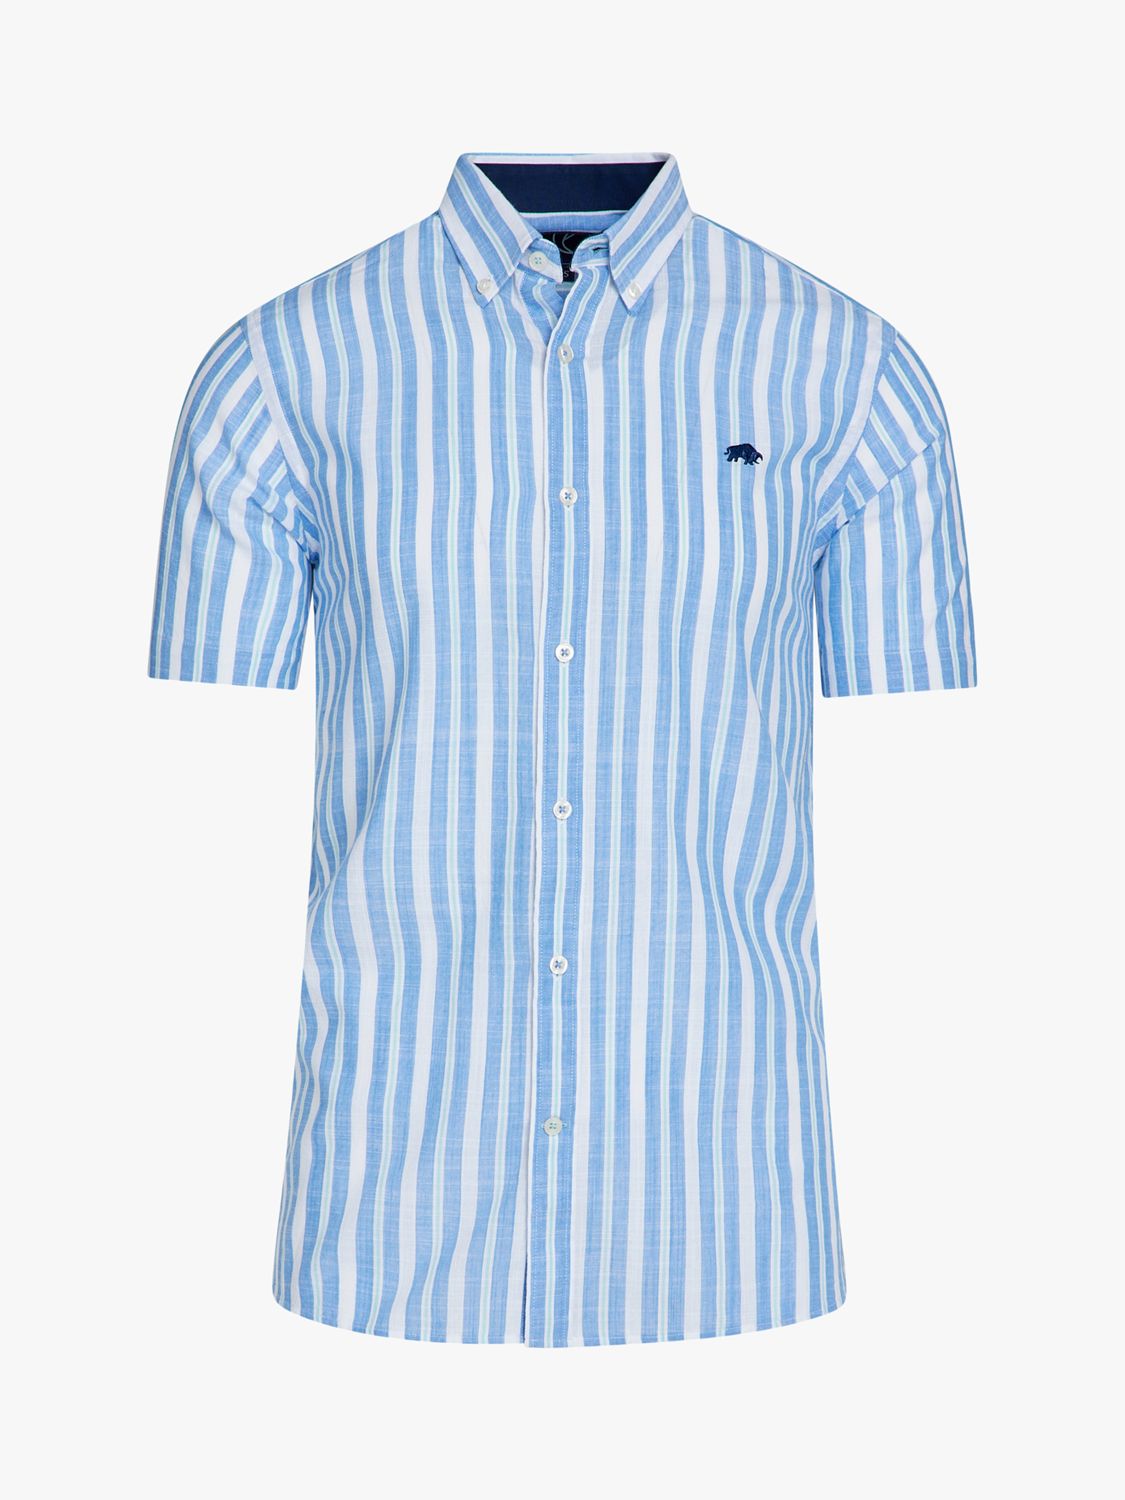 Raging Bull Short Sleeve Multi Stripe Linen Look Shirt, Mid Blue, XXXXXL